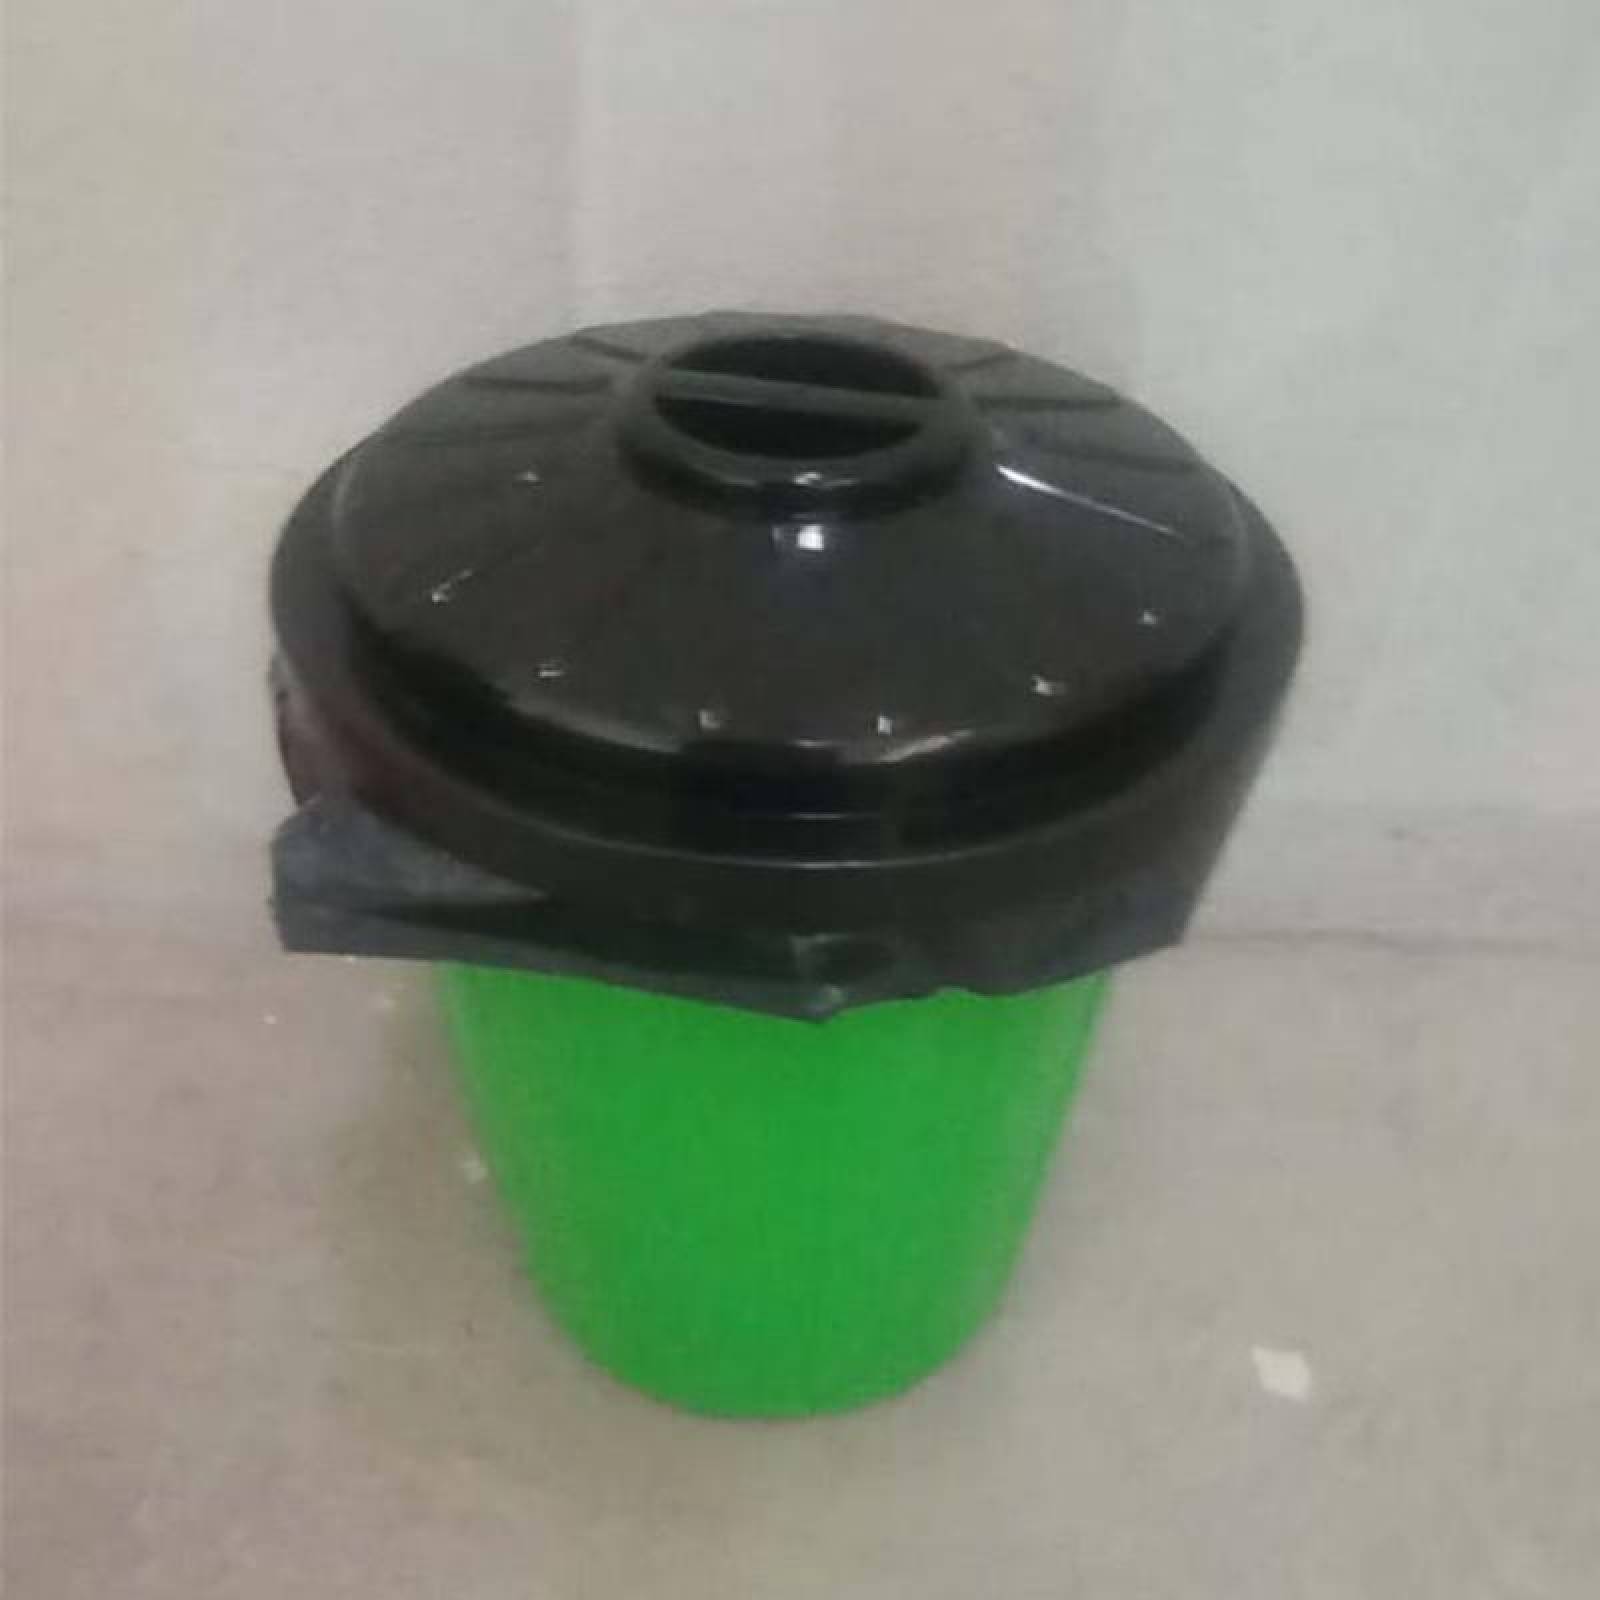 Bote para Basura Amplio MXRYG-001-4 1 Pza 7,5lts Polietileno Color Verde con Tapa Negra, RecyGreen